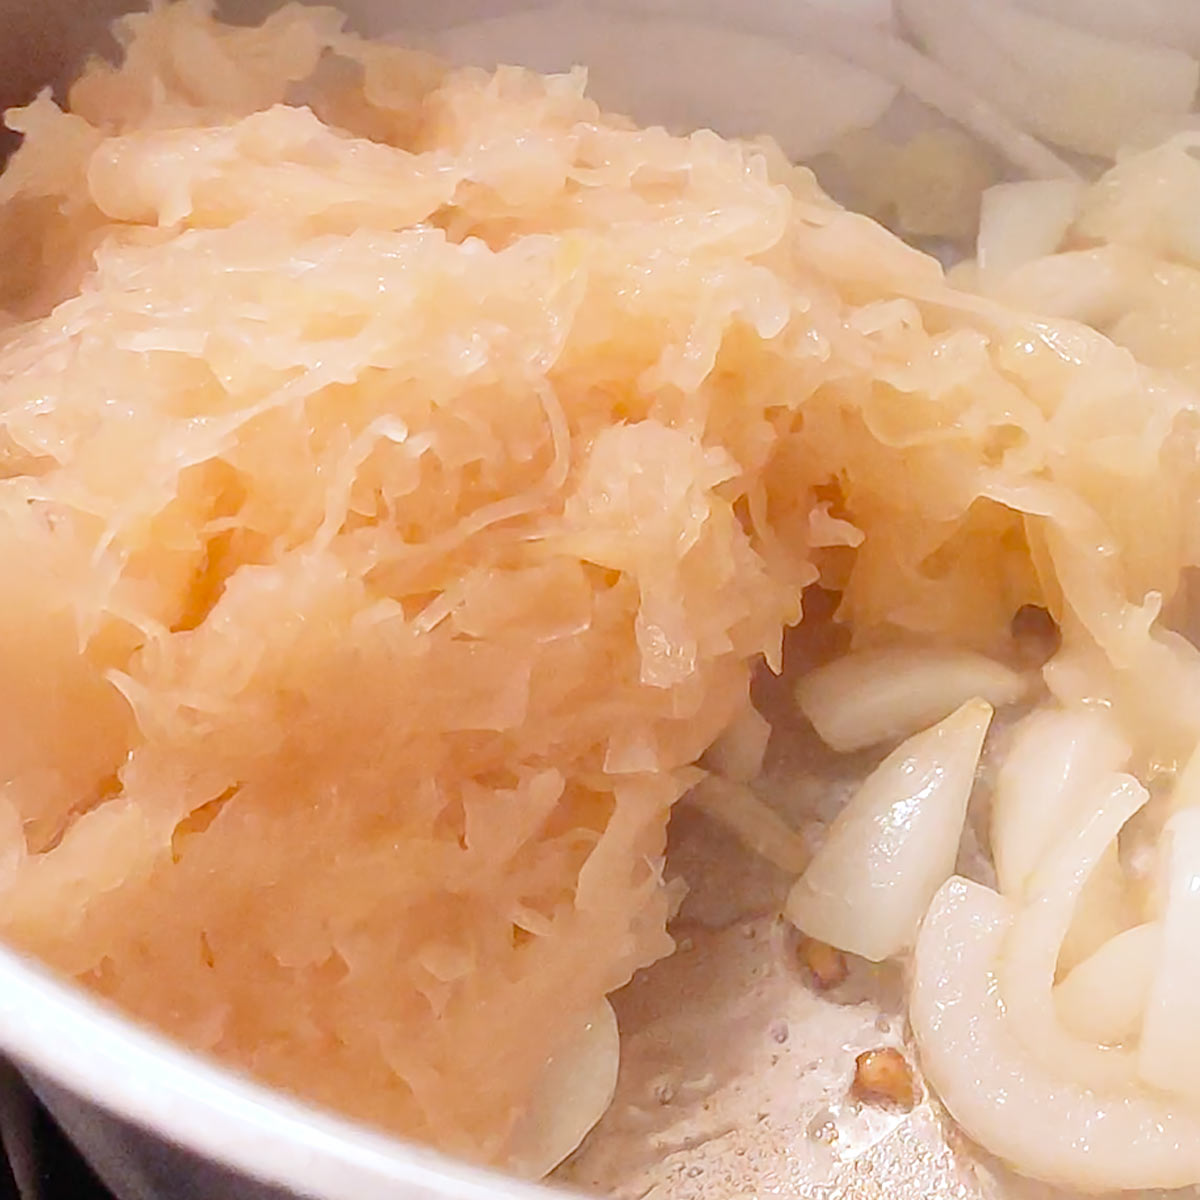 stir sauerkraut into the pan